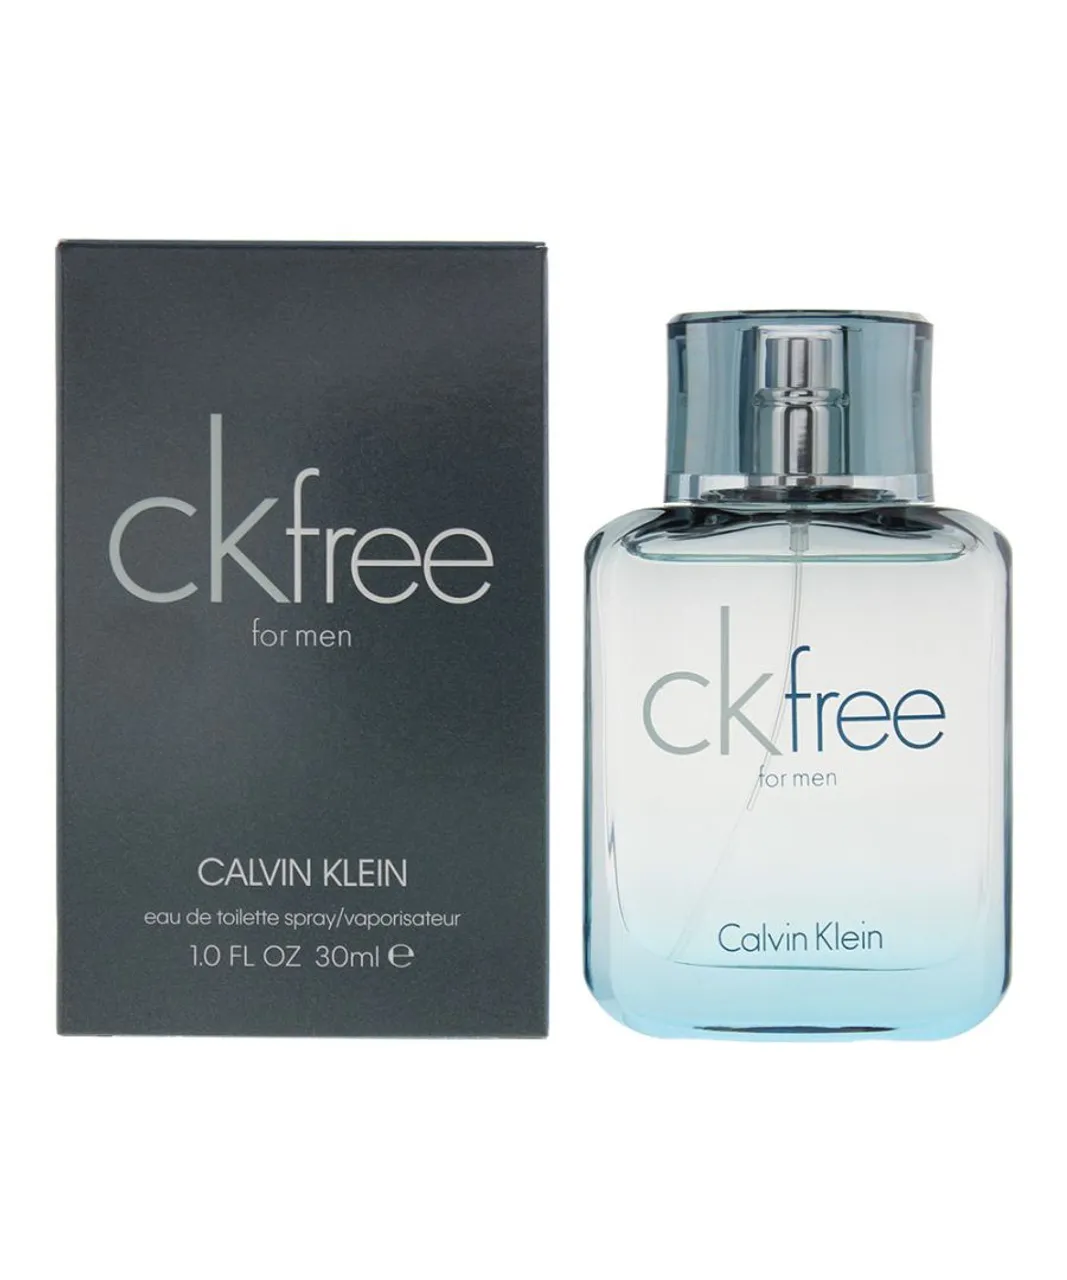 Calvin Klein Mens CK Free Eau de Toilette 30ml Spray For Him - One Size